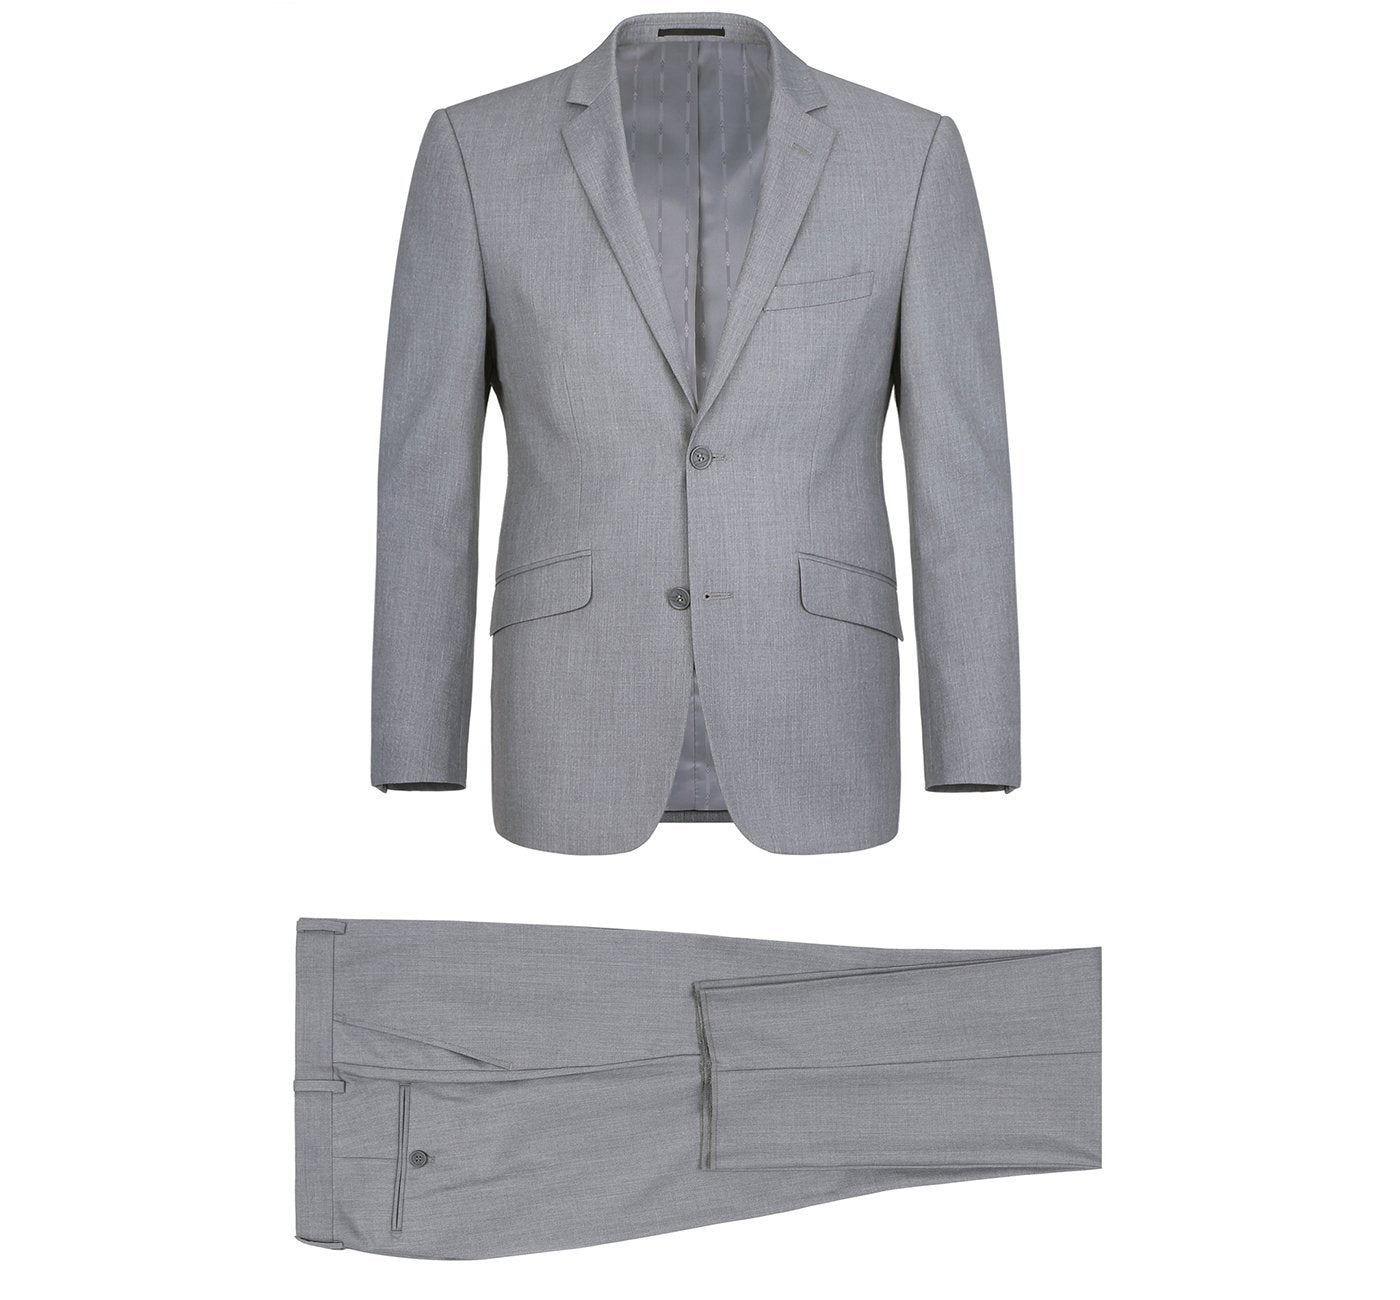 202-2 Men's Light Grey 2-Piece Single Breasted Notch Lapel Suit